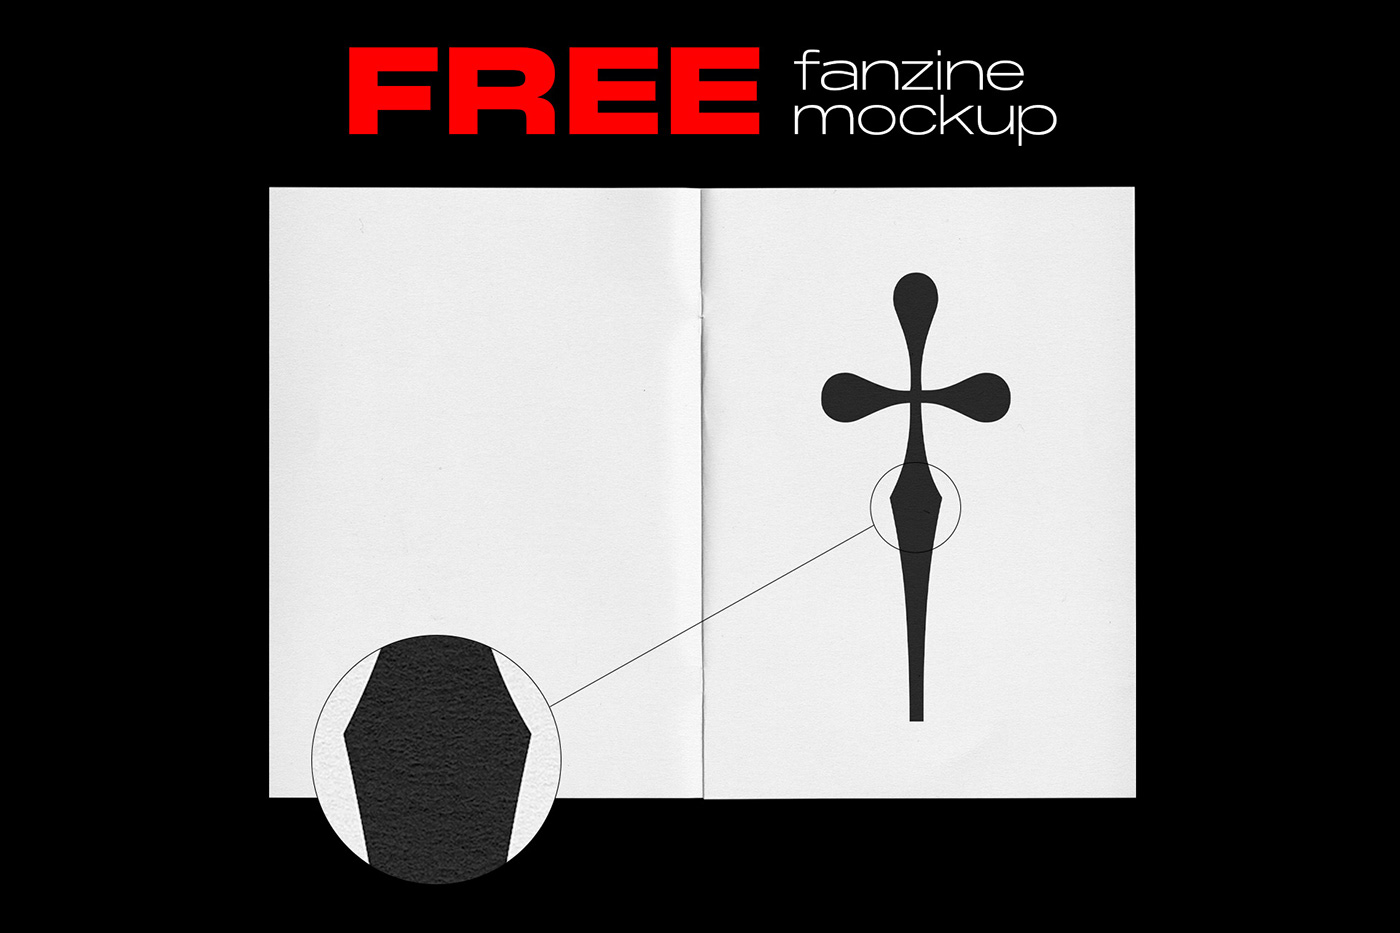 Free Magazine Mockup freebie free mockup  Mockup template fanzine mockup psd mockup free download book mockup free zine mockup